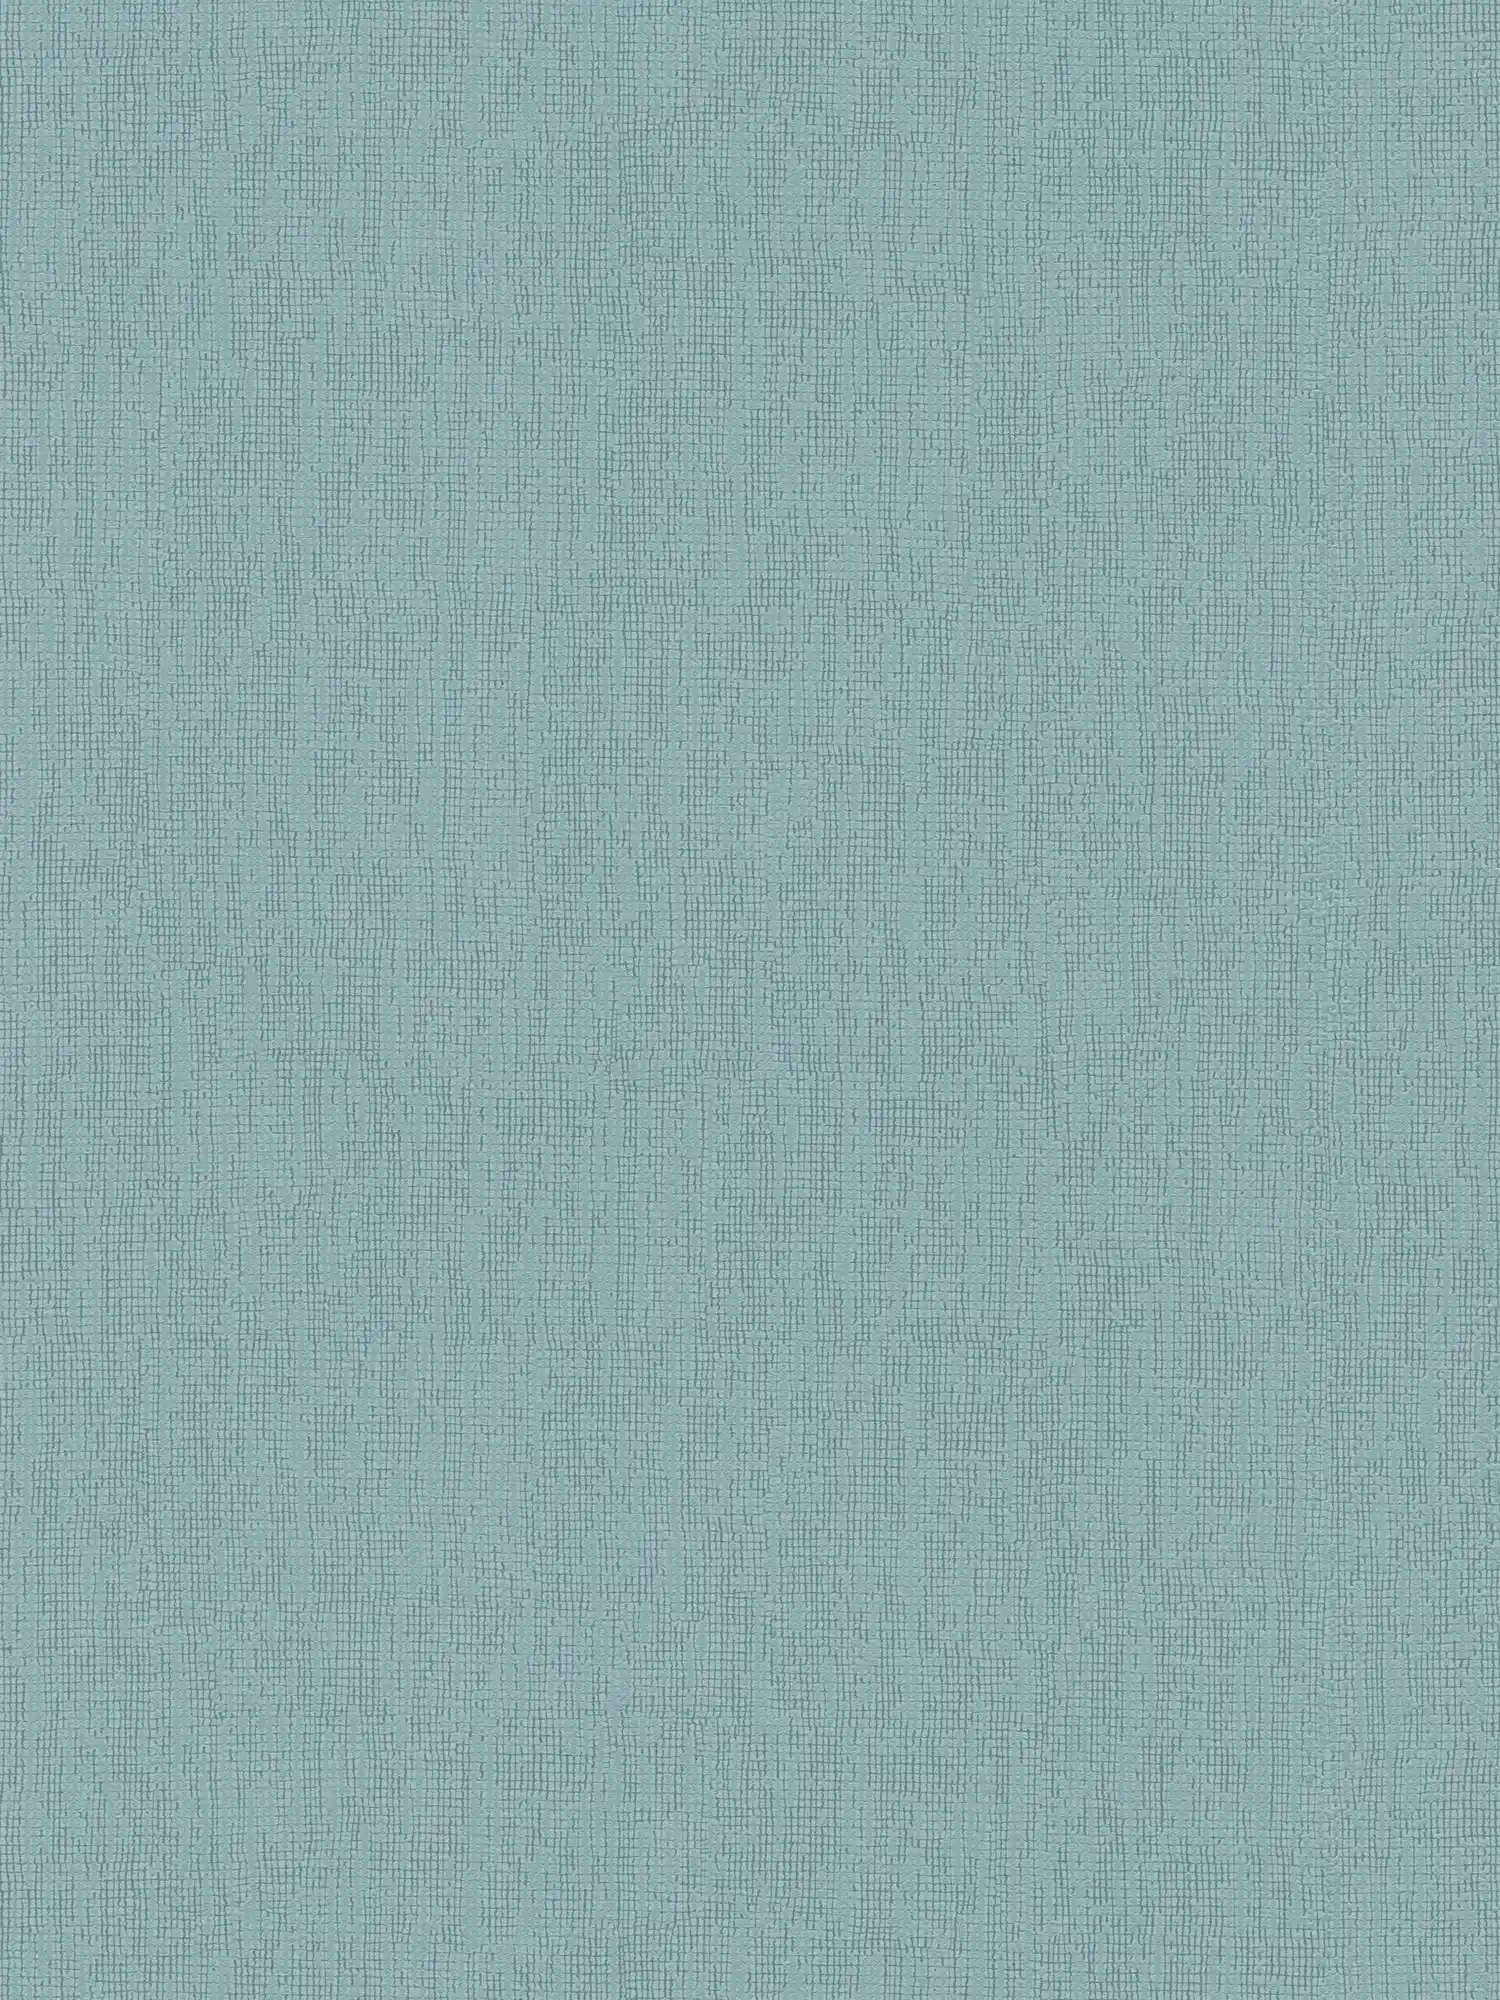 Light blue wallpaper plain with texture details, Scandi styles
